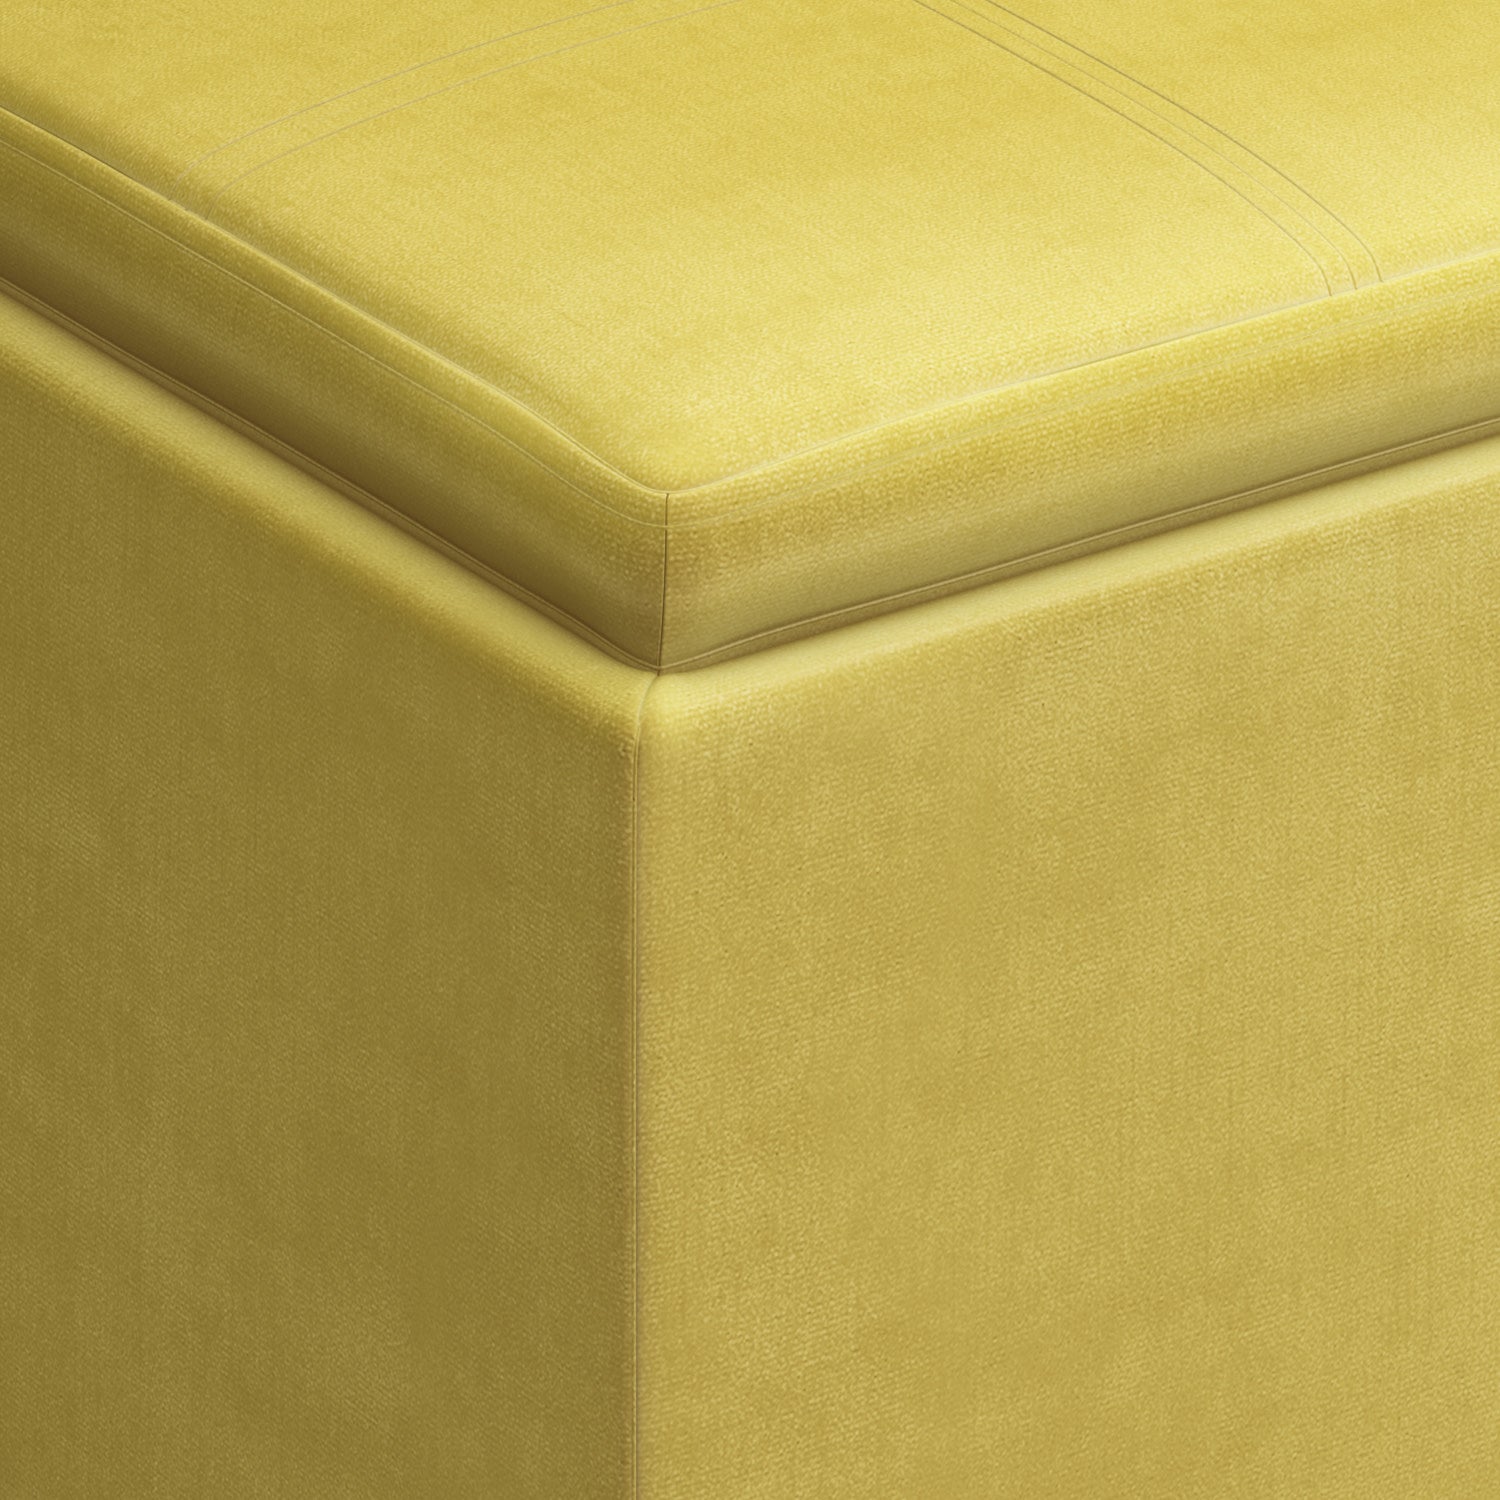 Dijon Yellow Velvet Fabric | Rockwood Vegan Leather Cube Storage Ottoman with Tray